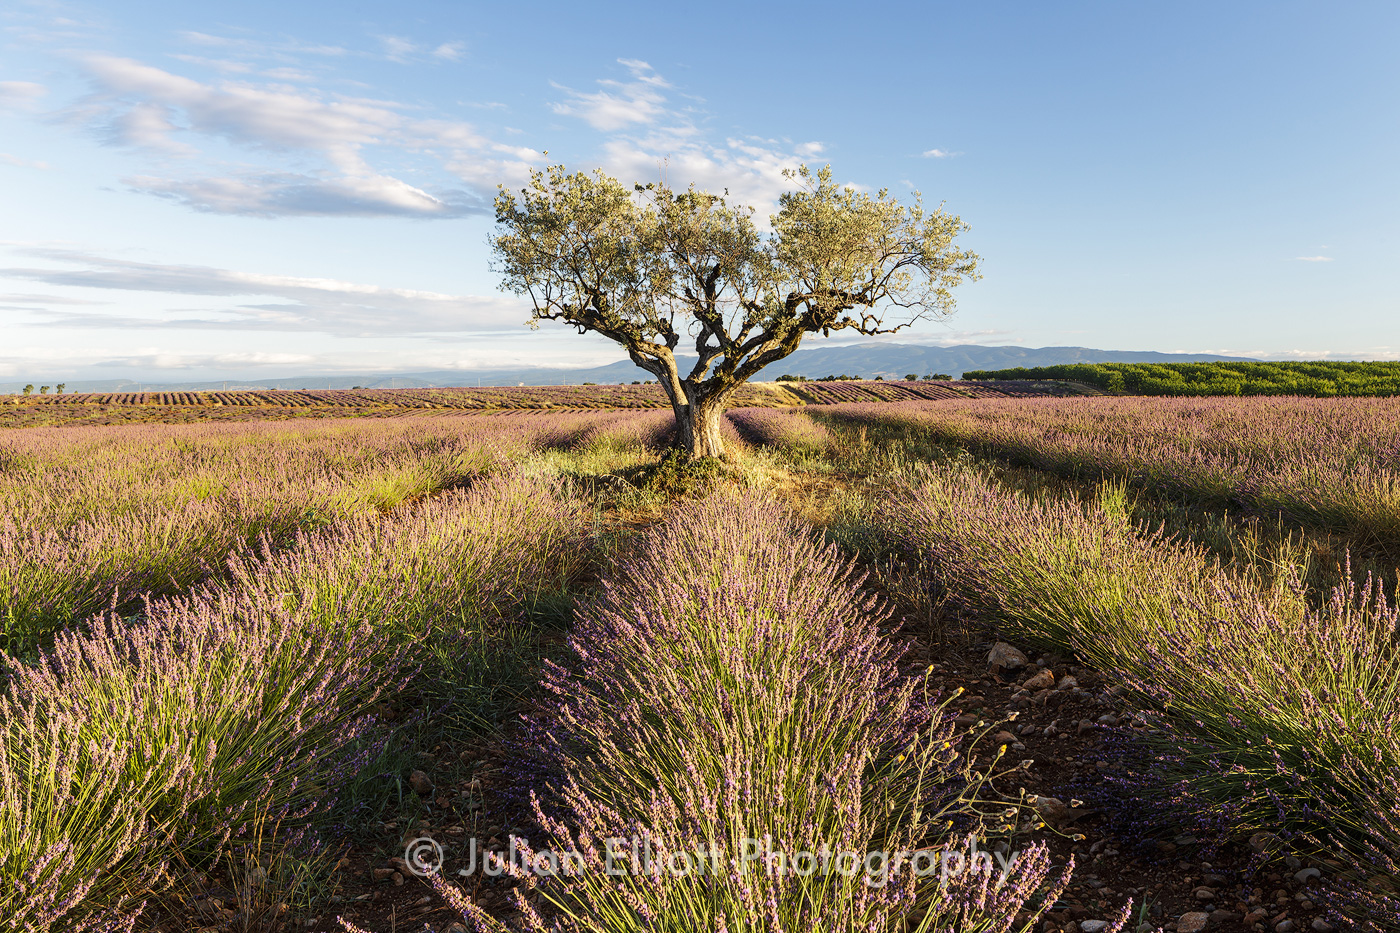 Lavender fields on the Plateau de Valensole